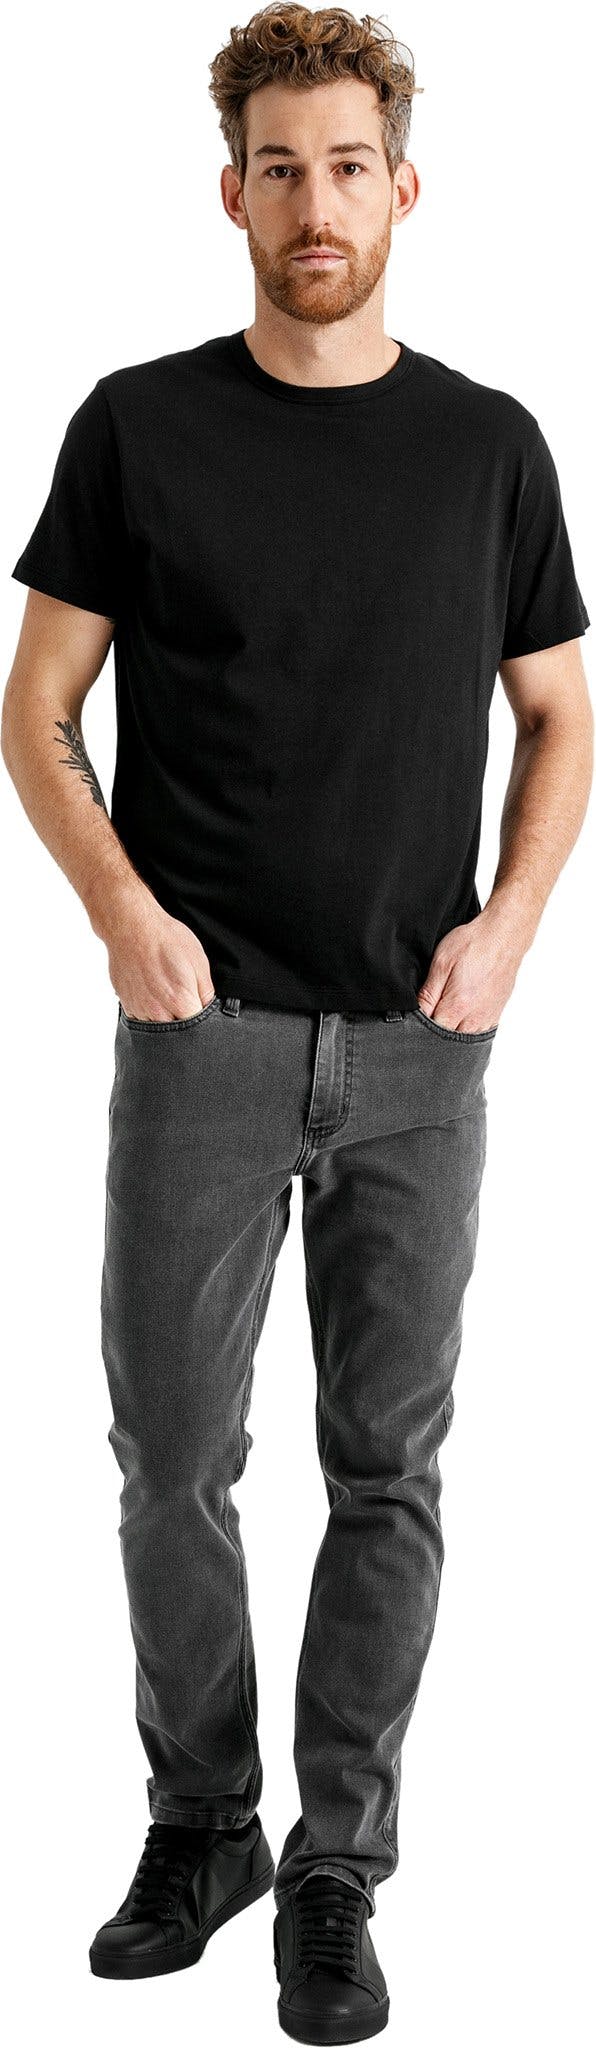 Product image for Performance Denim Slim Jeans - Men's